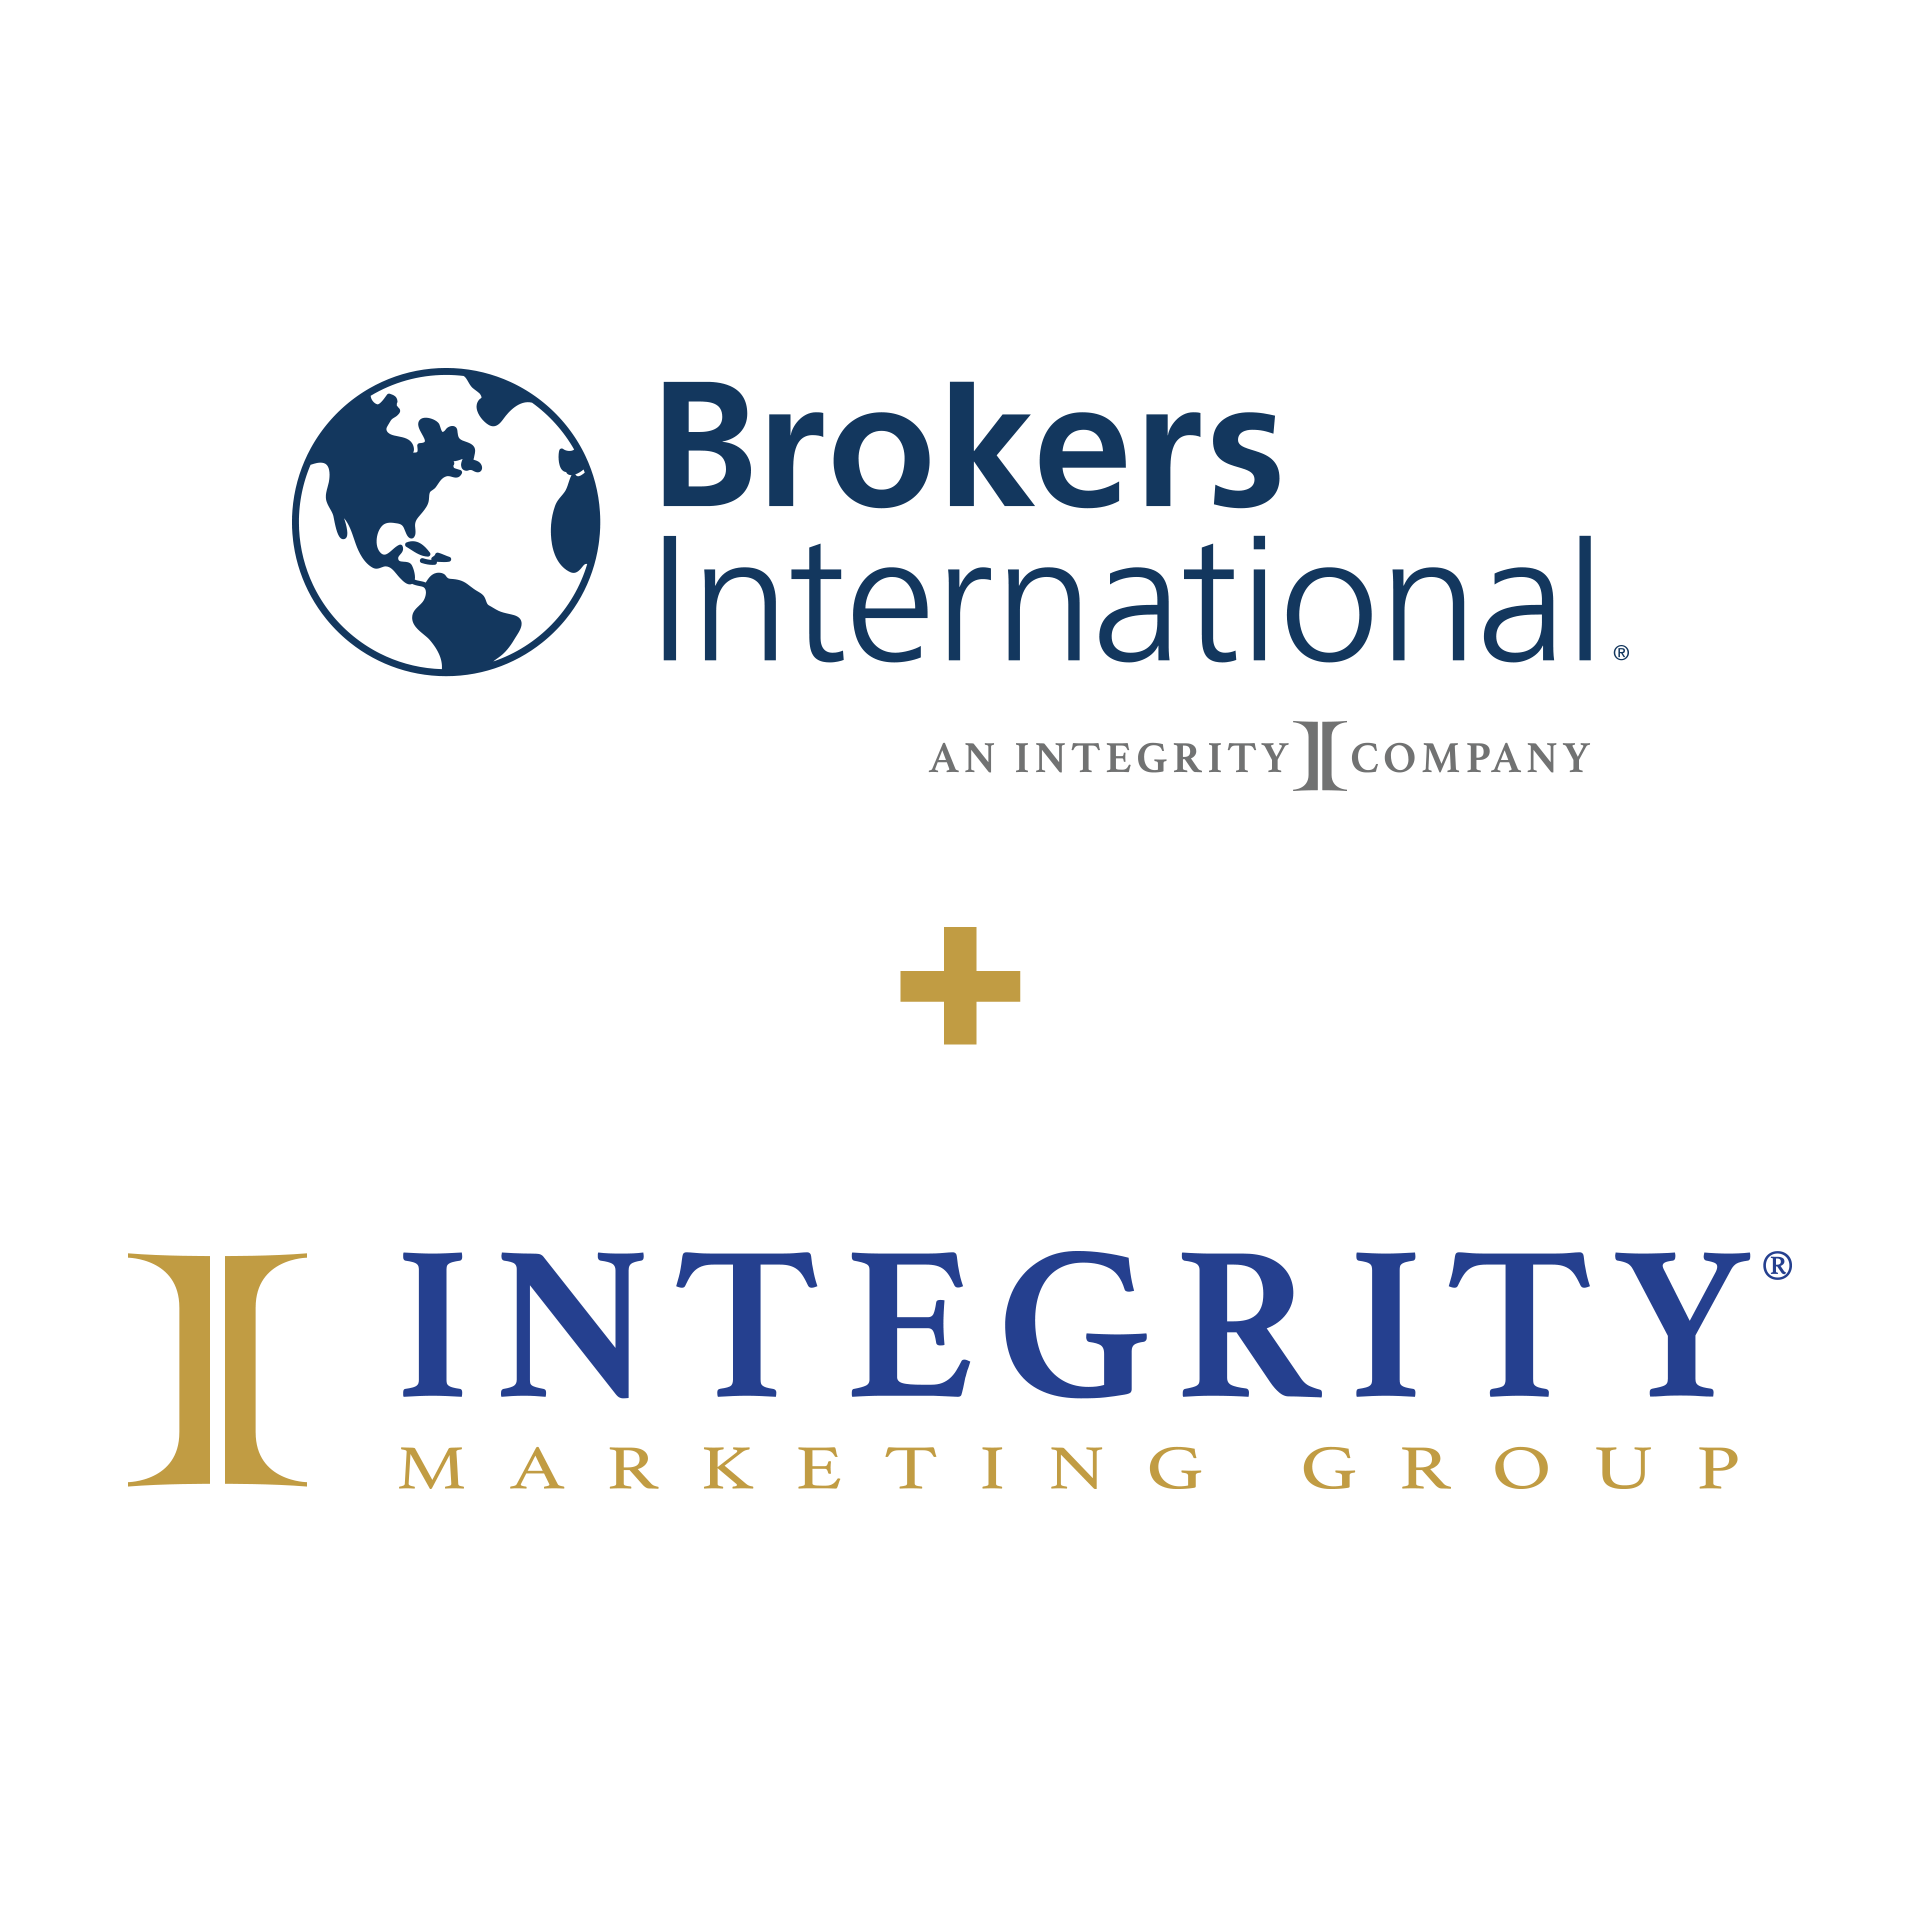 Brokers International + Integrity Marketing Group